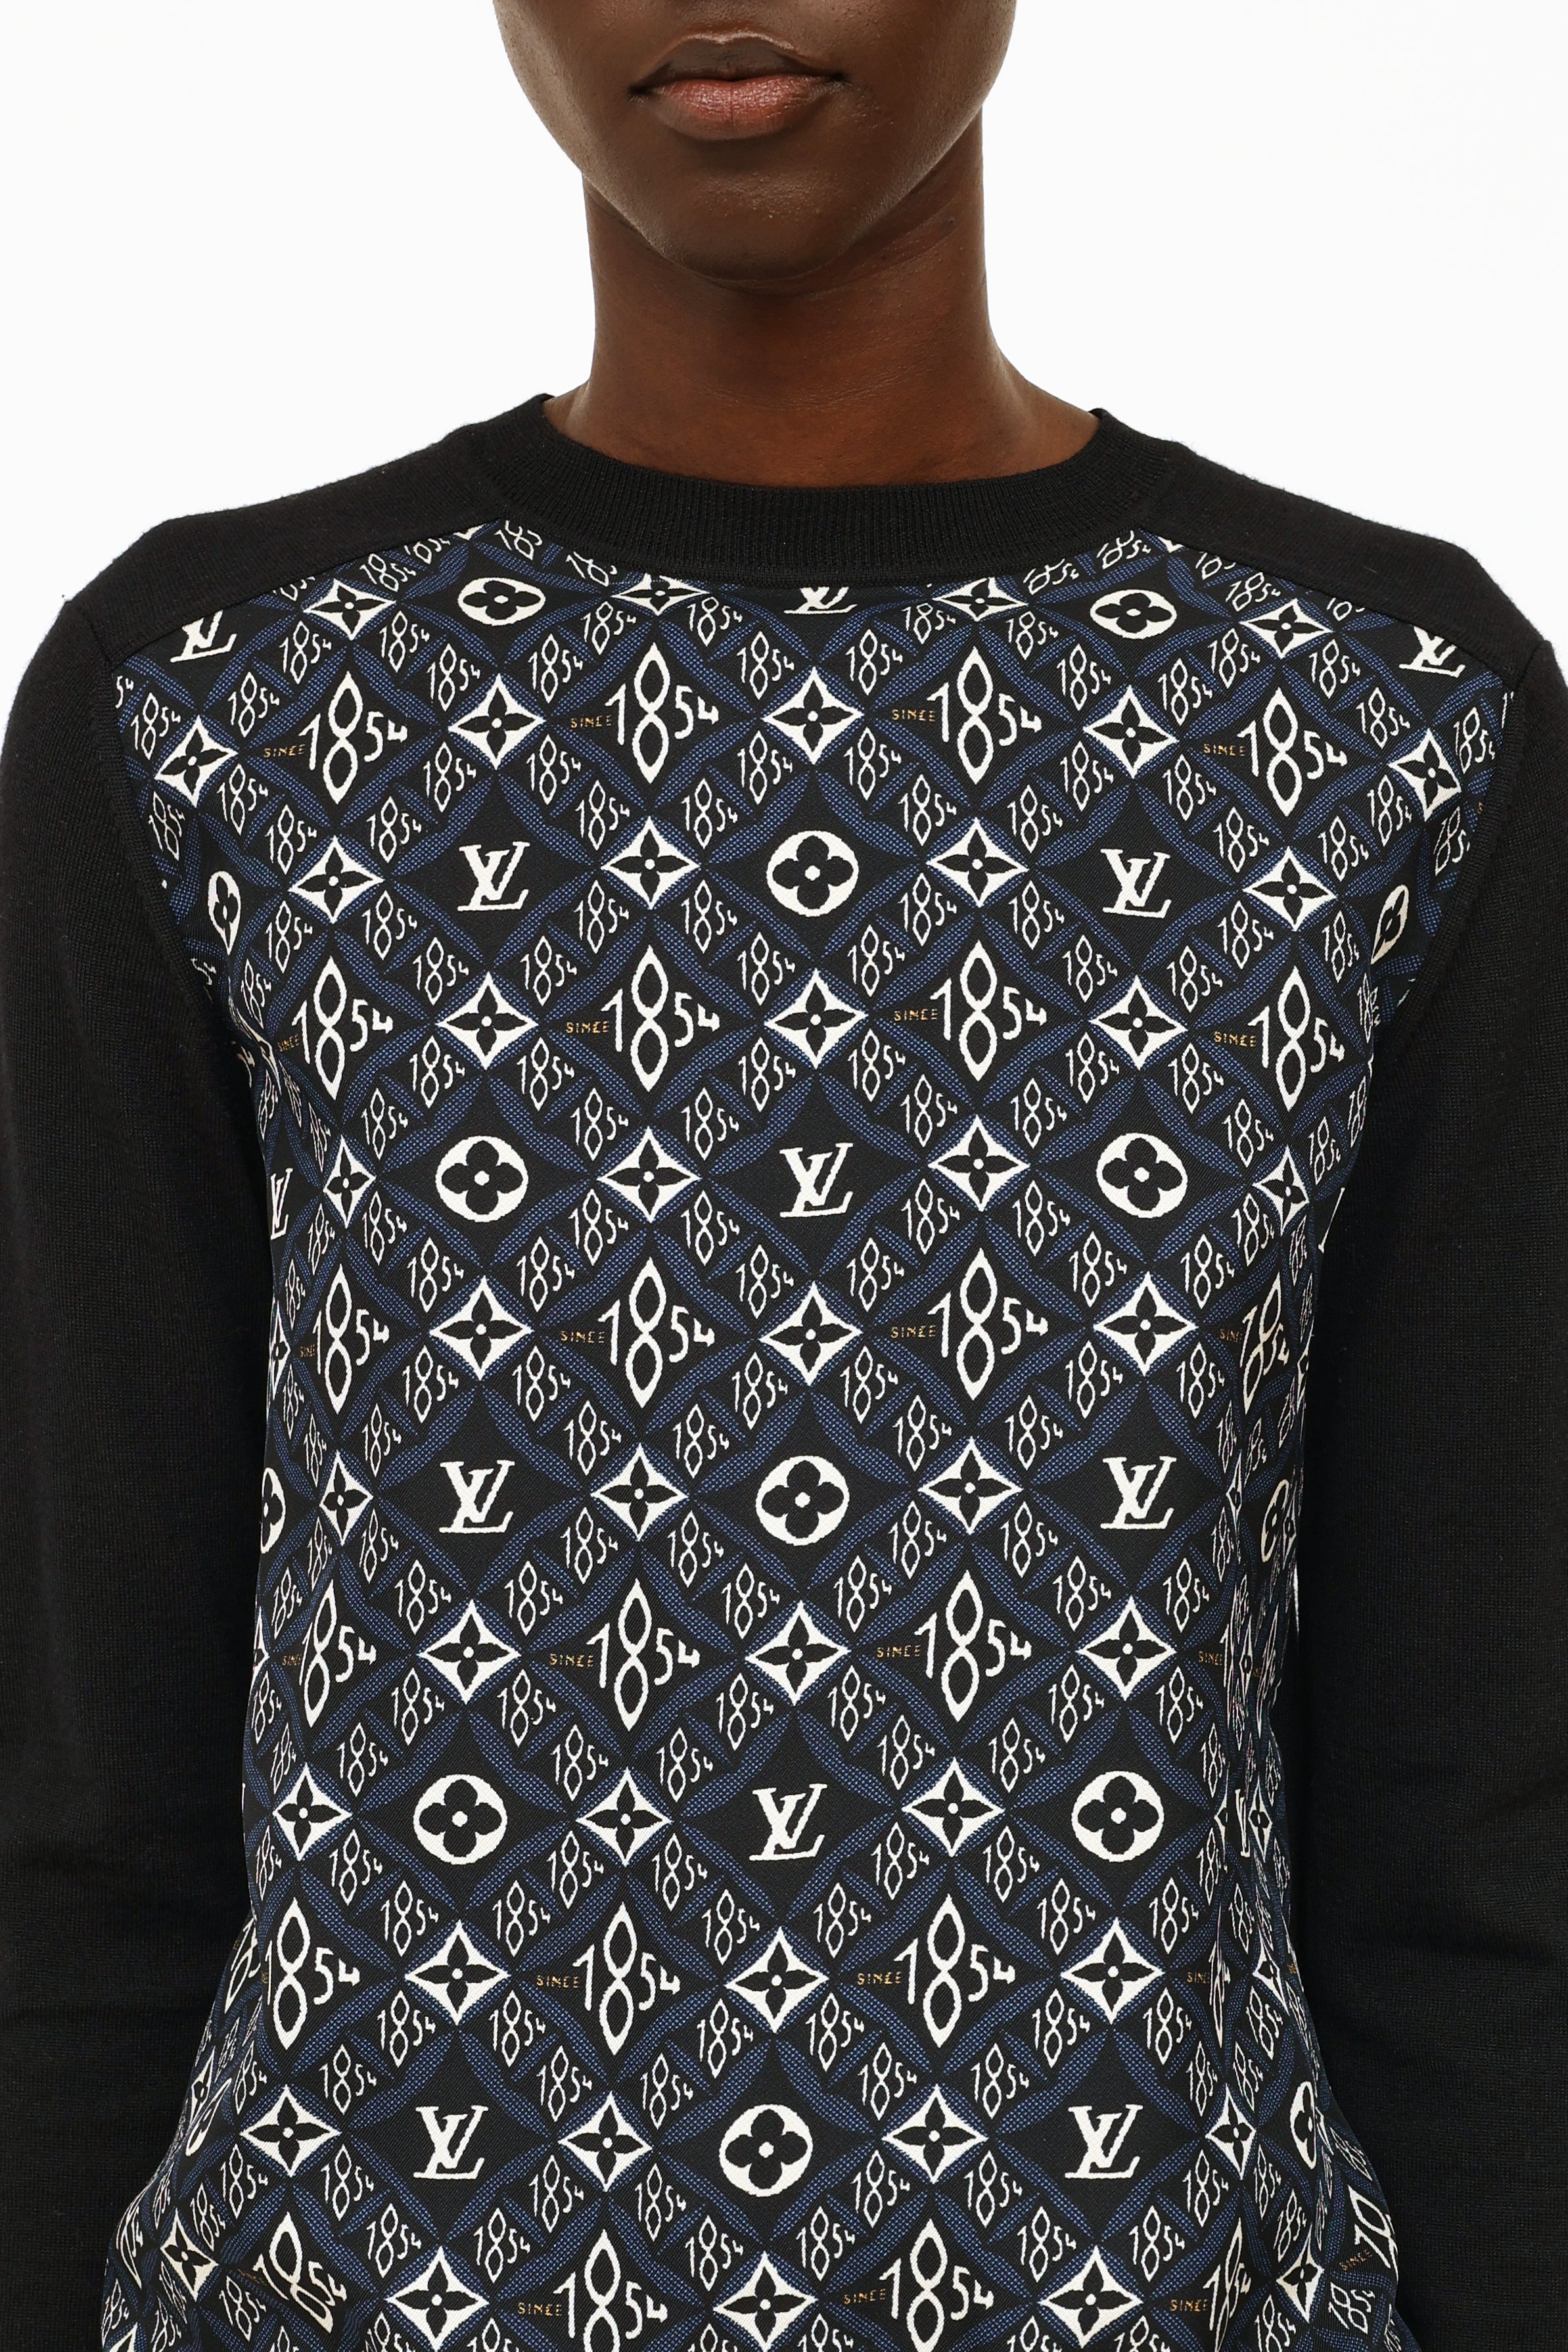 Louis Vuitton - Authenticated Sweatshirt - Silk Black for Men, Never Worn